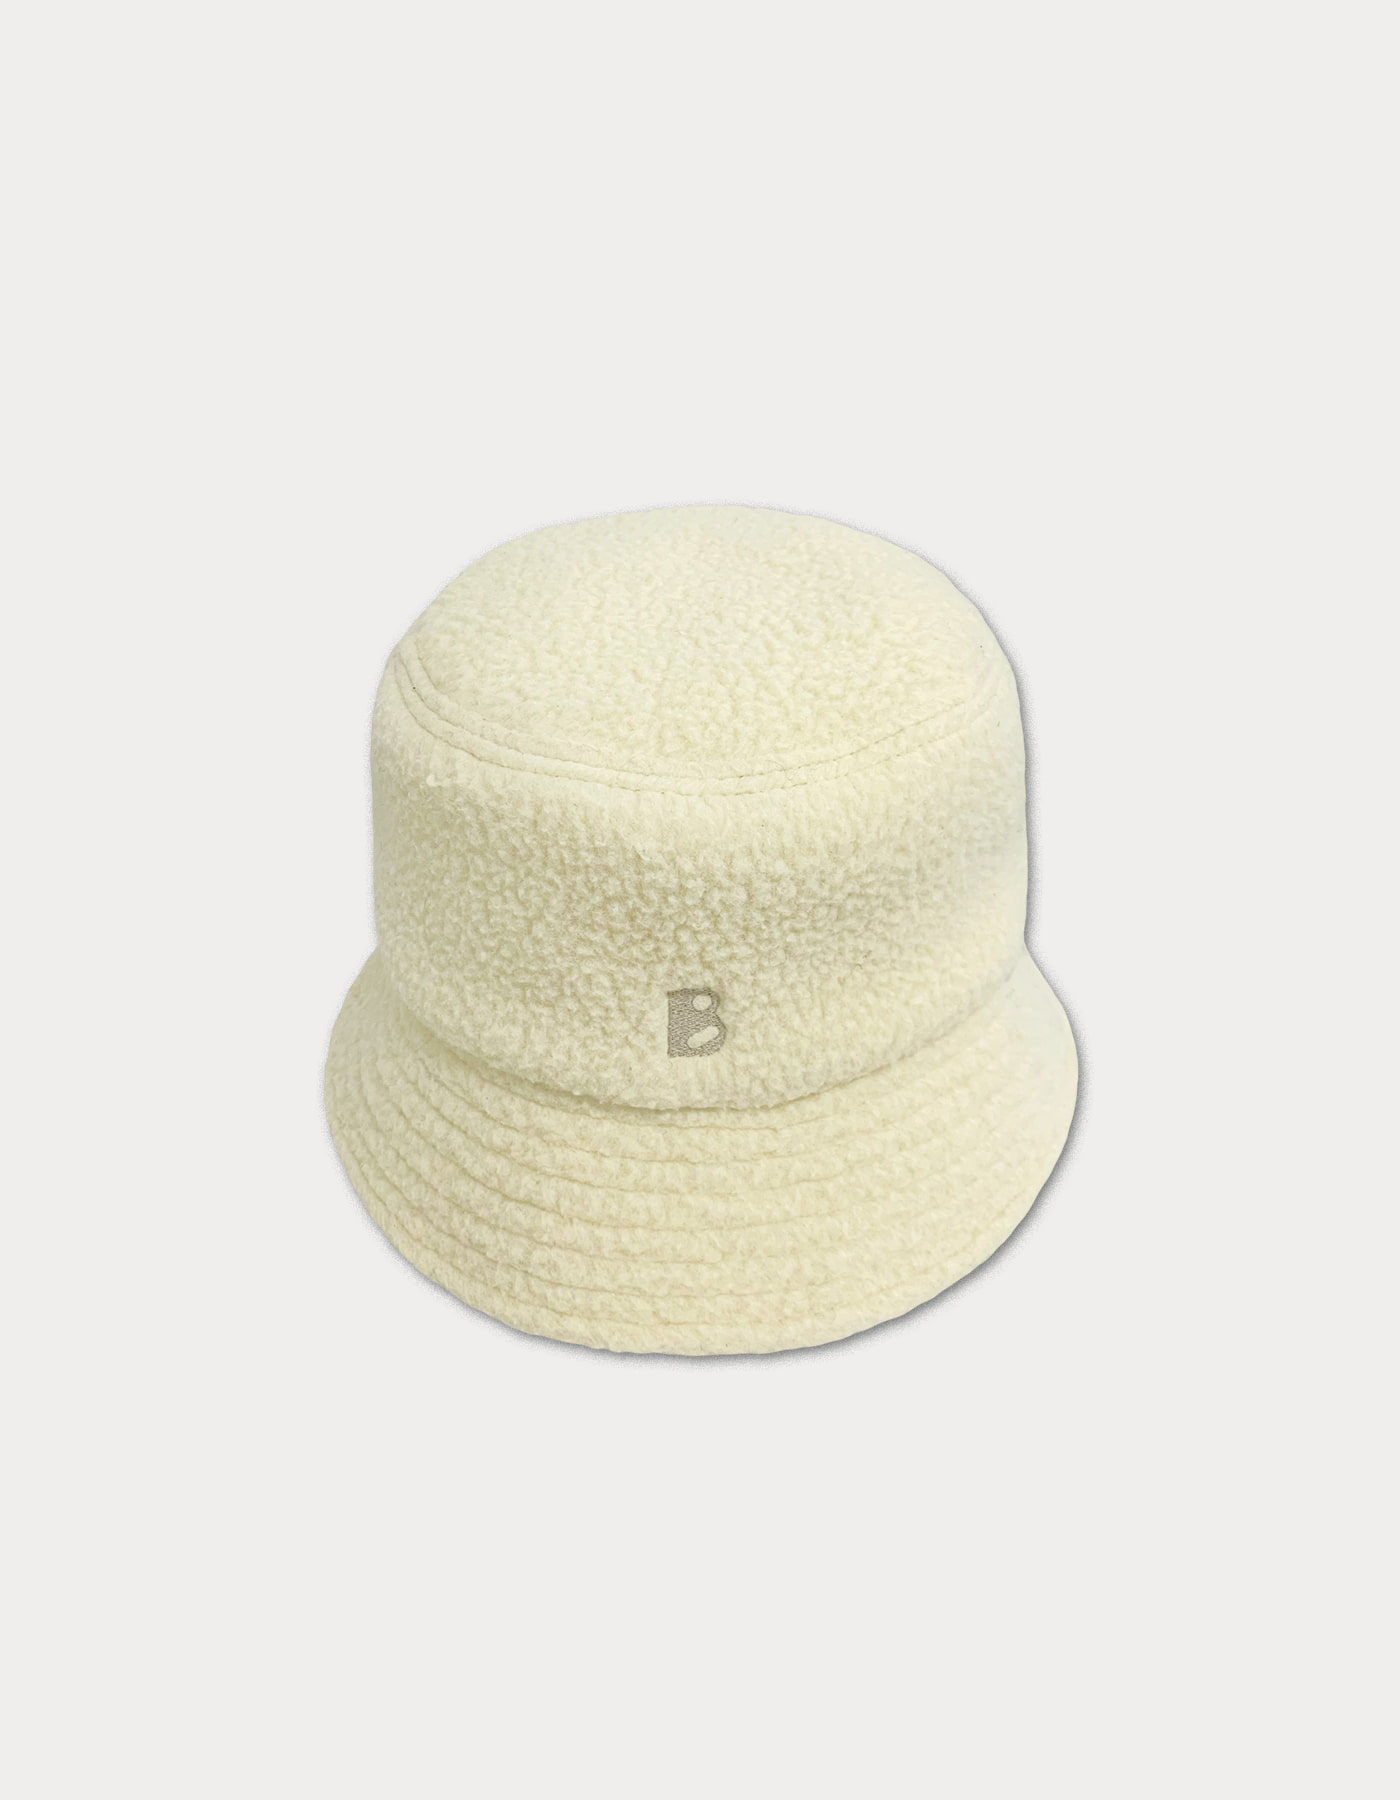 Fleece b logo bucket hat - cream